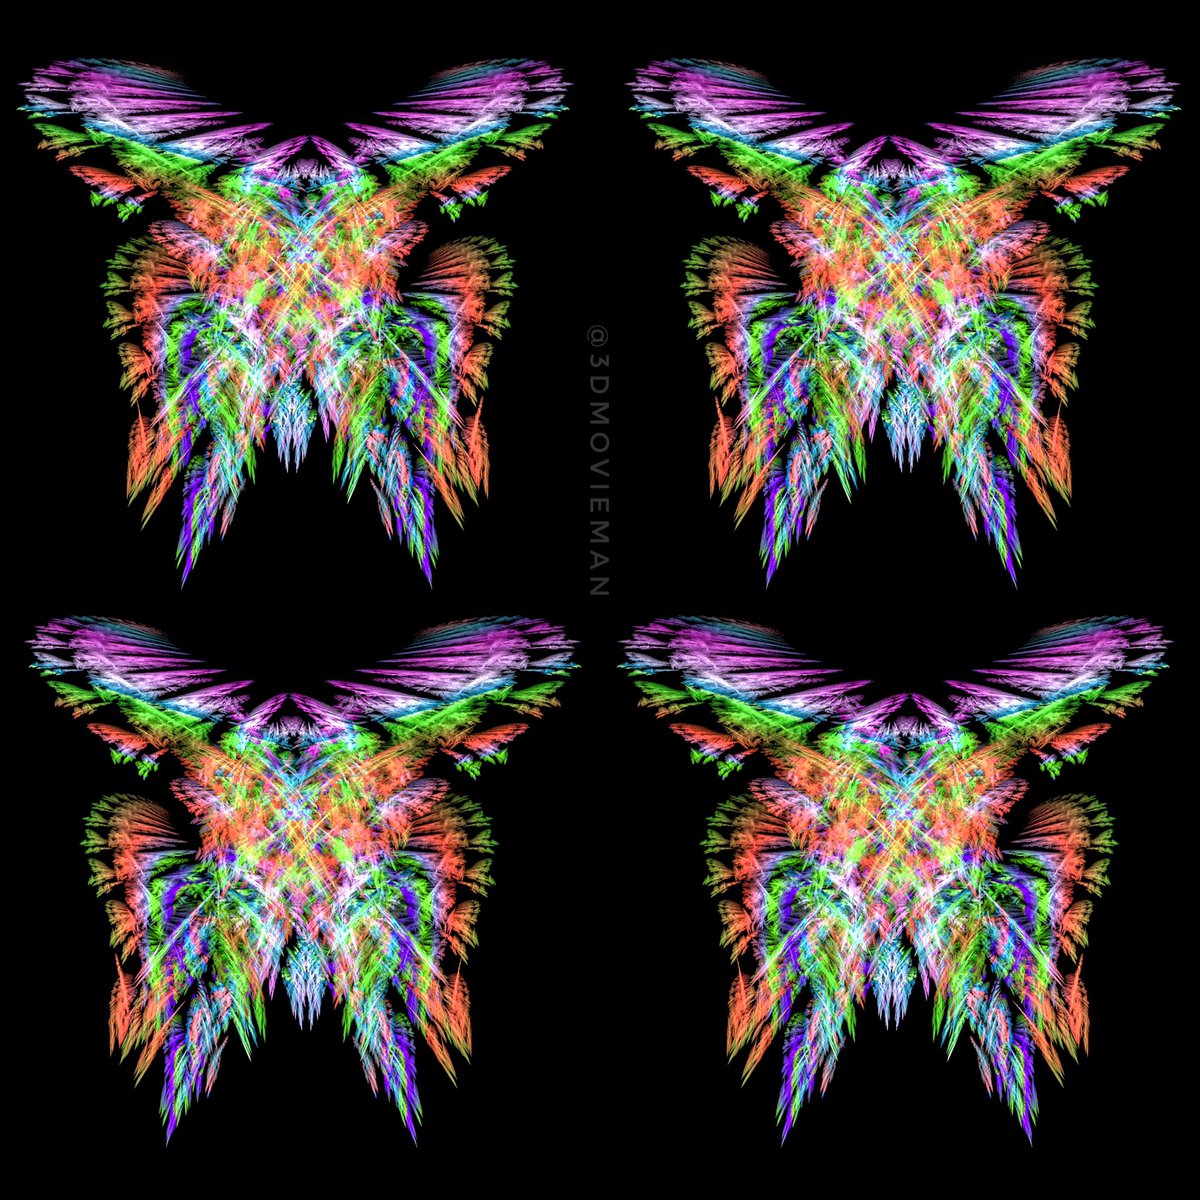 Omni #stereoscopic flame fractal moth

#stereoscopy #digitalart #fractalart #3dart #colorful #stereogram